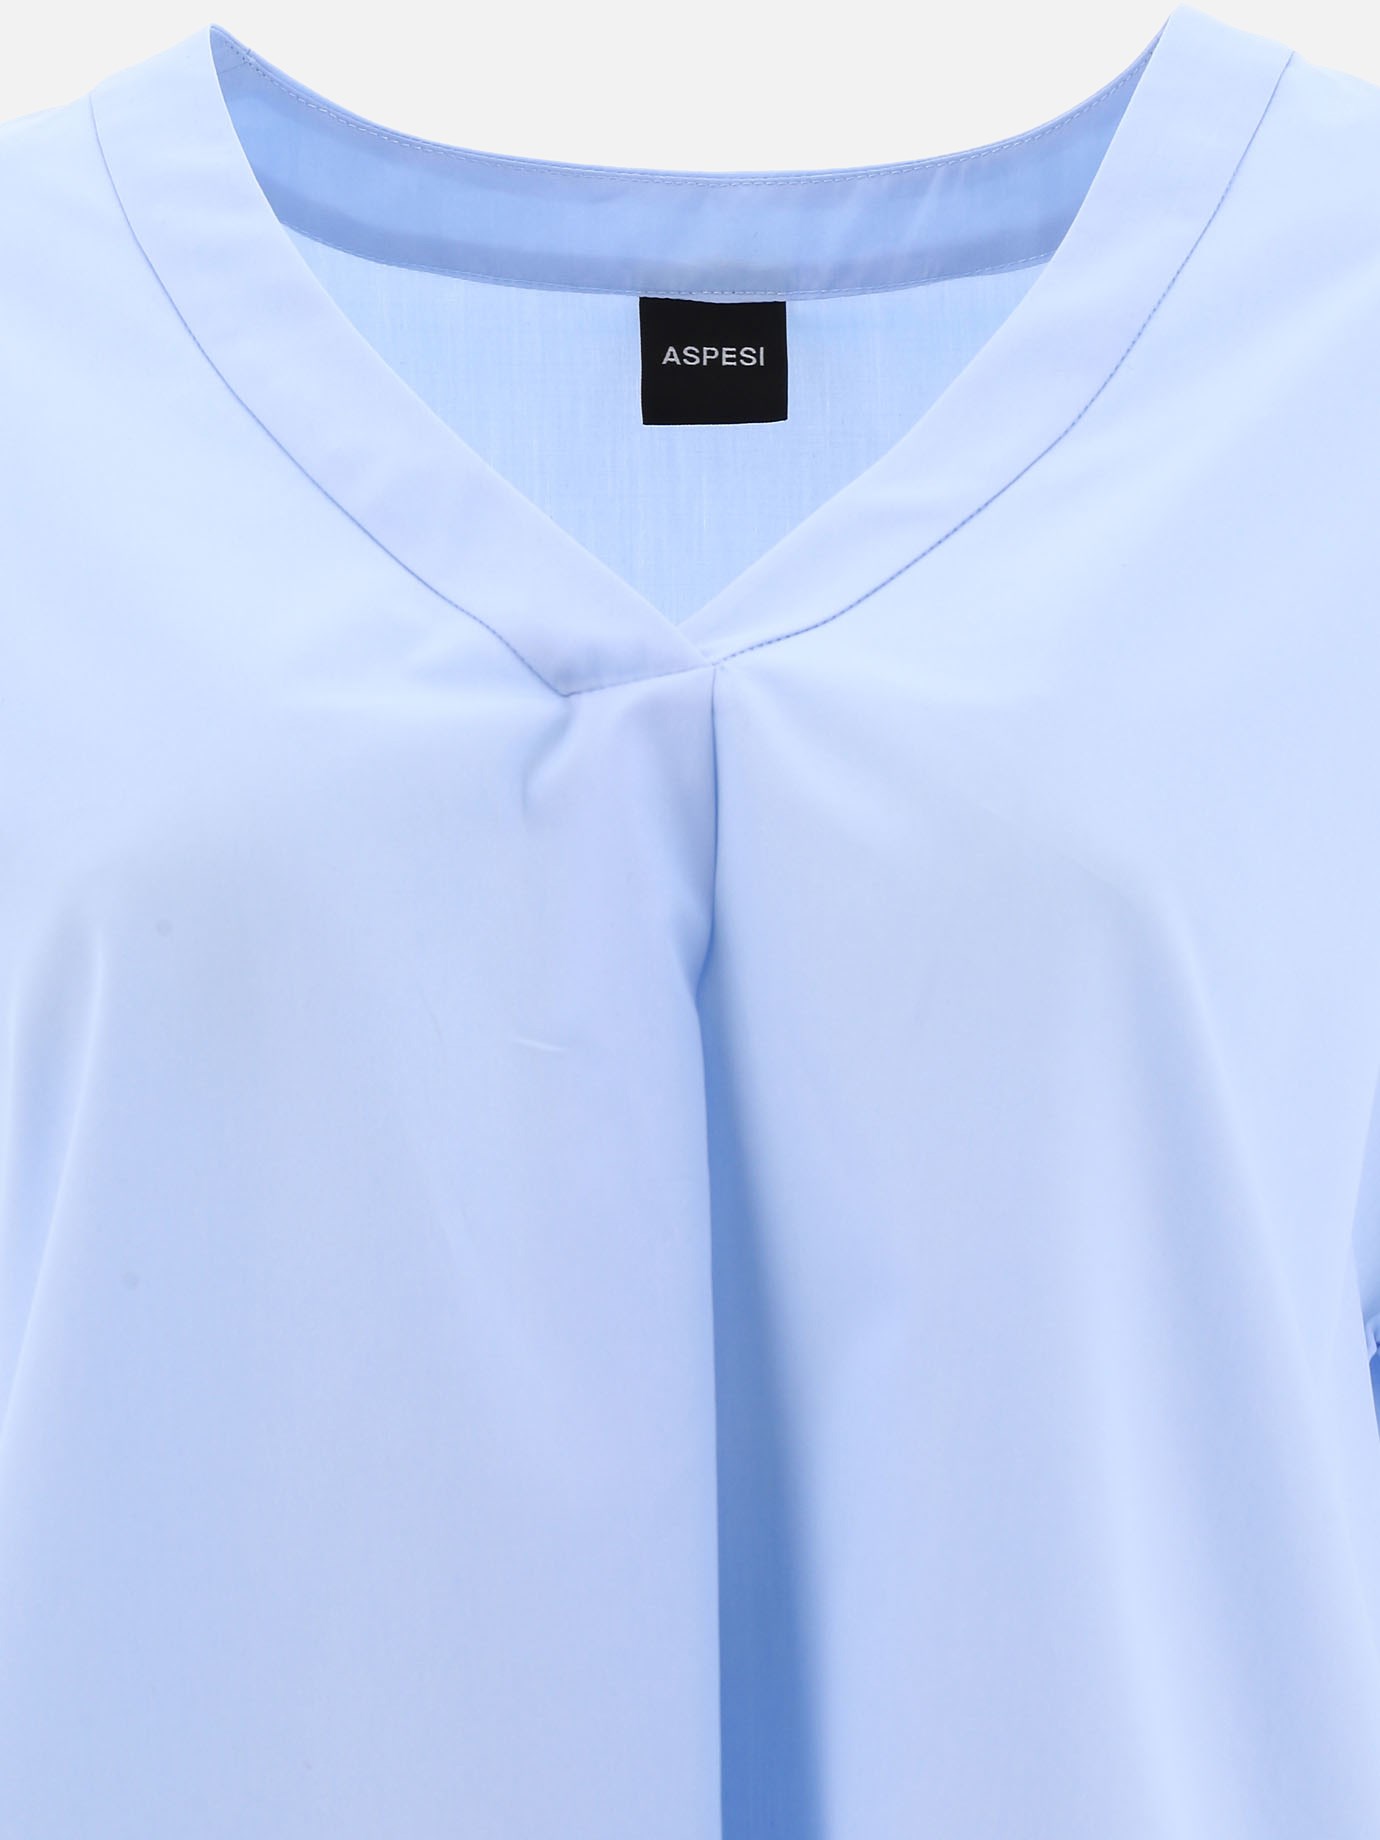 V-neck blouse by Aspesi